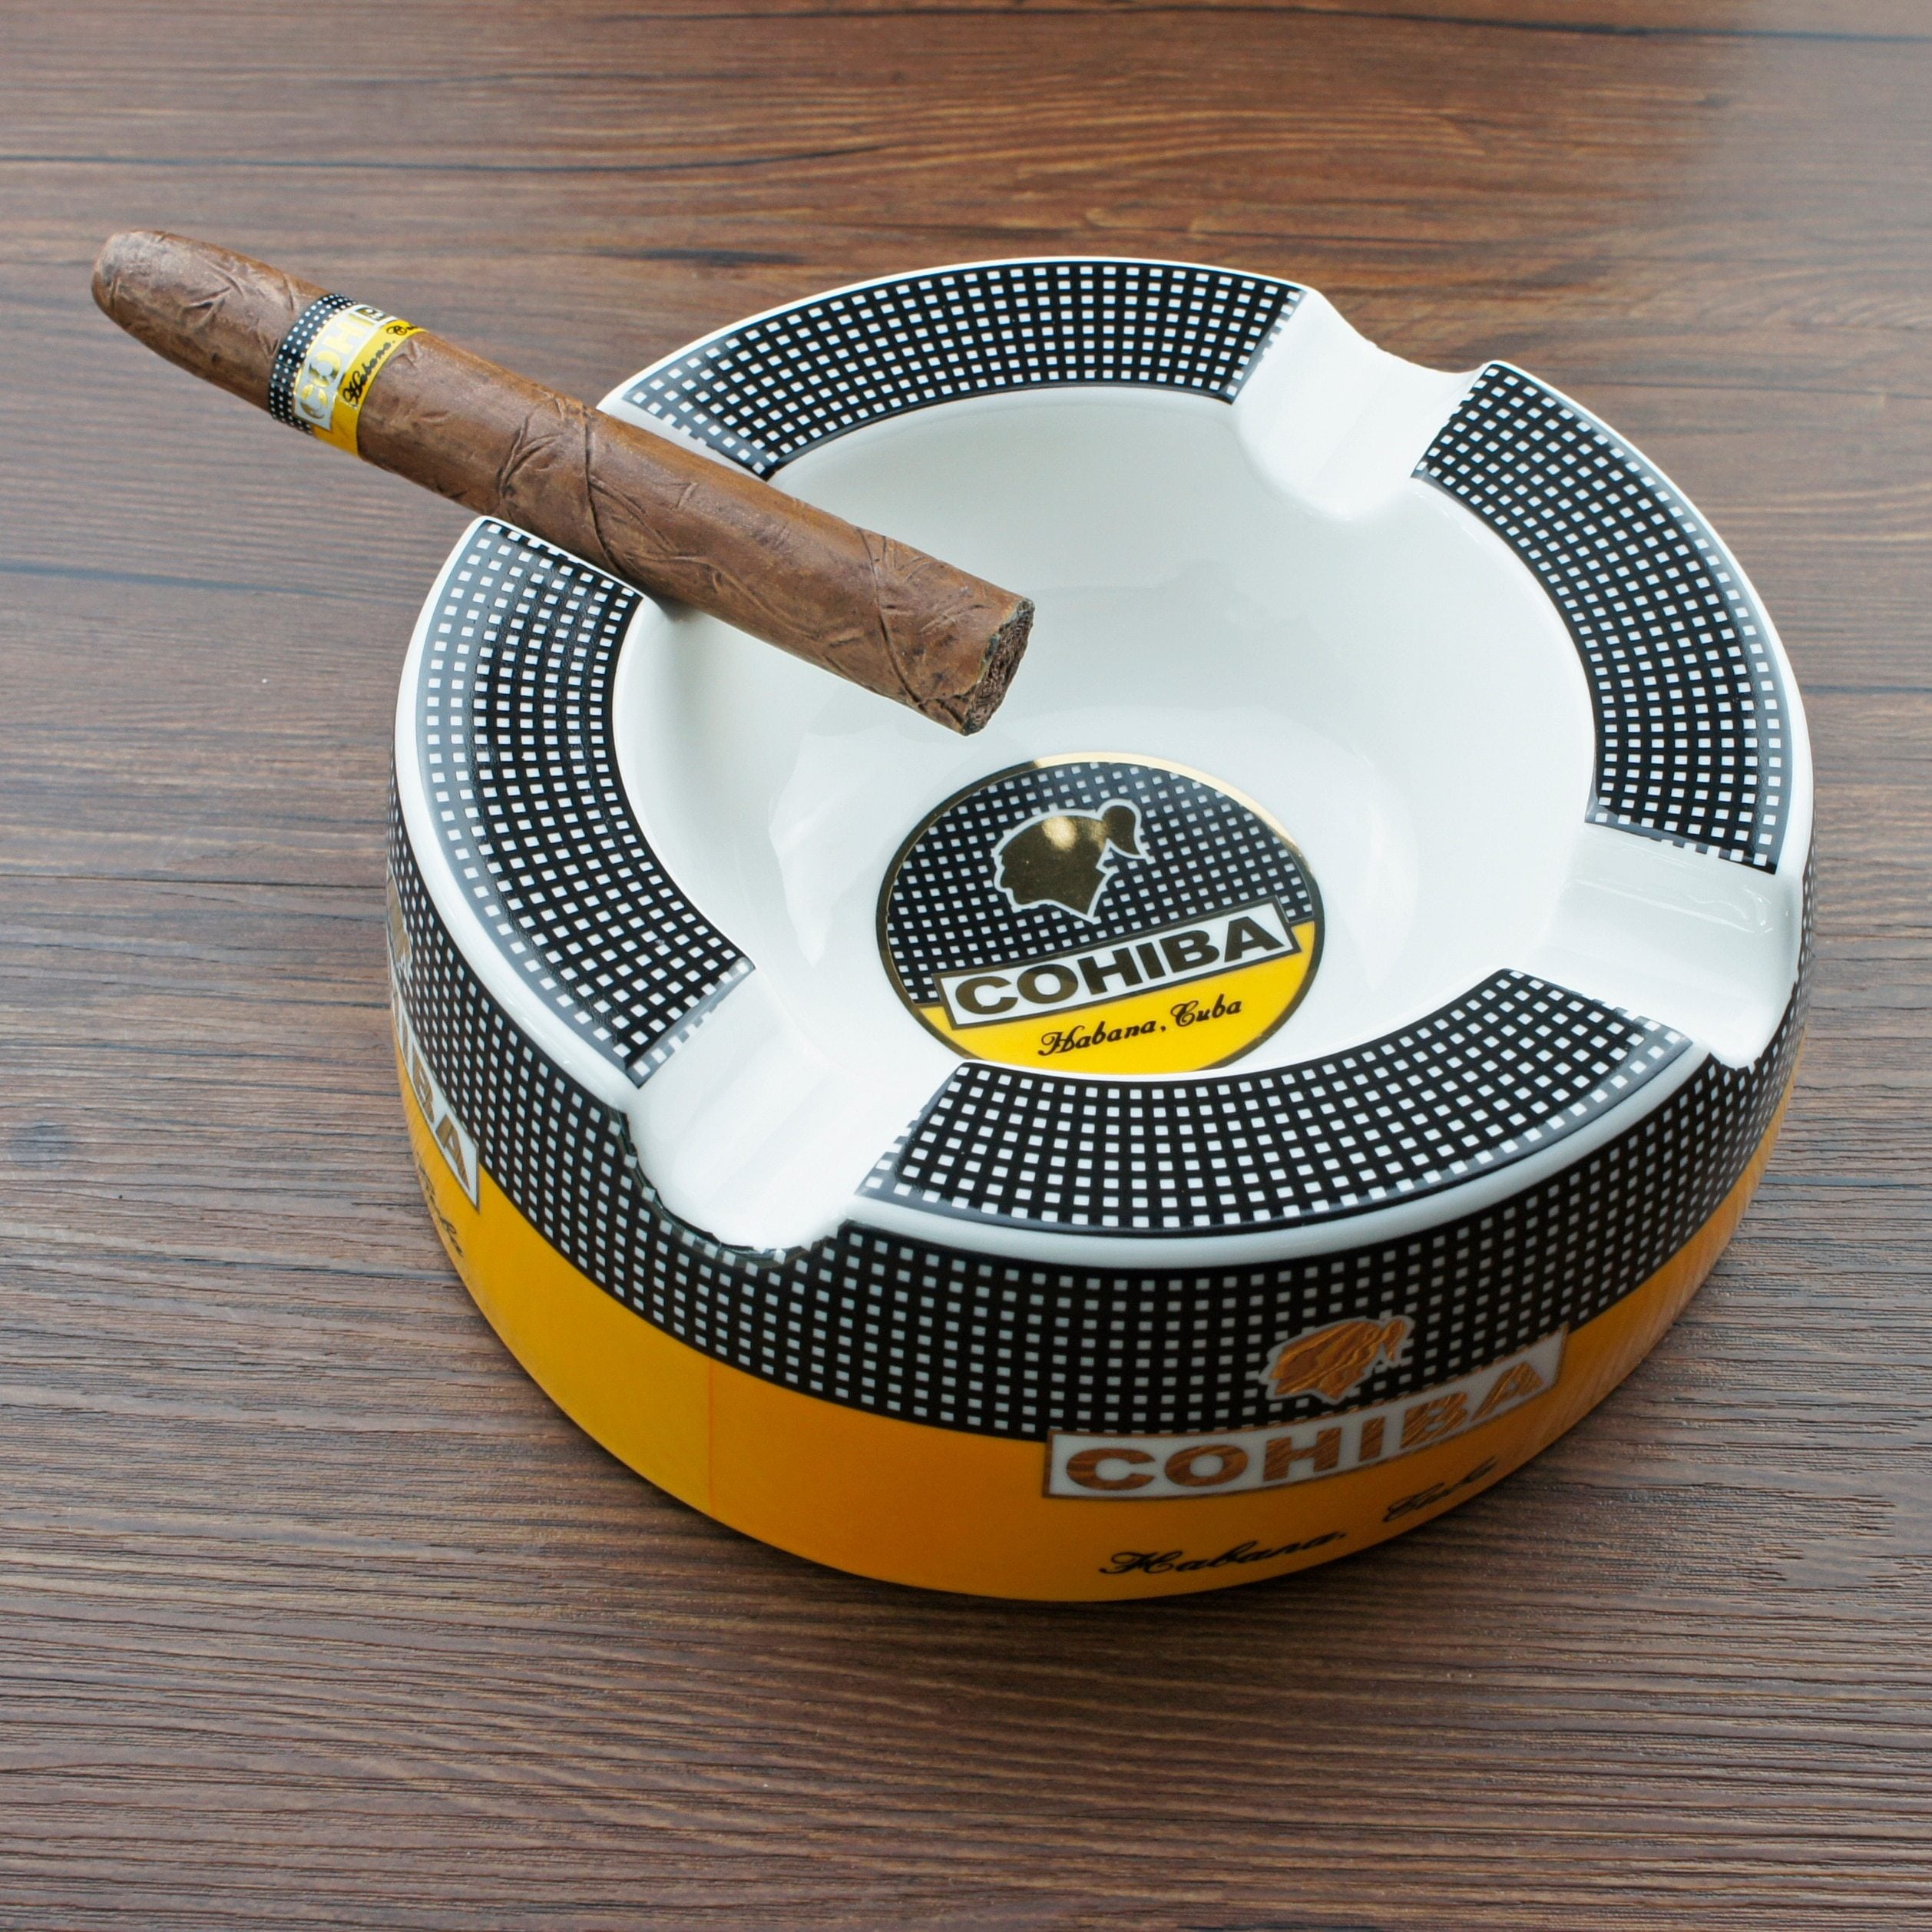 Cigar four middle round ashtray